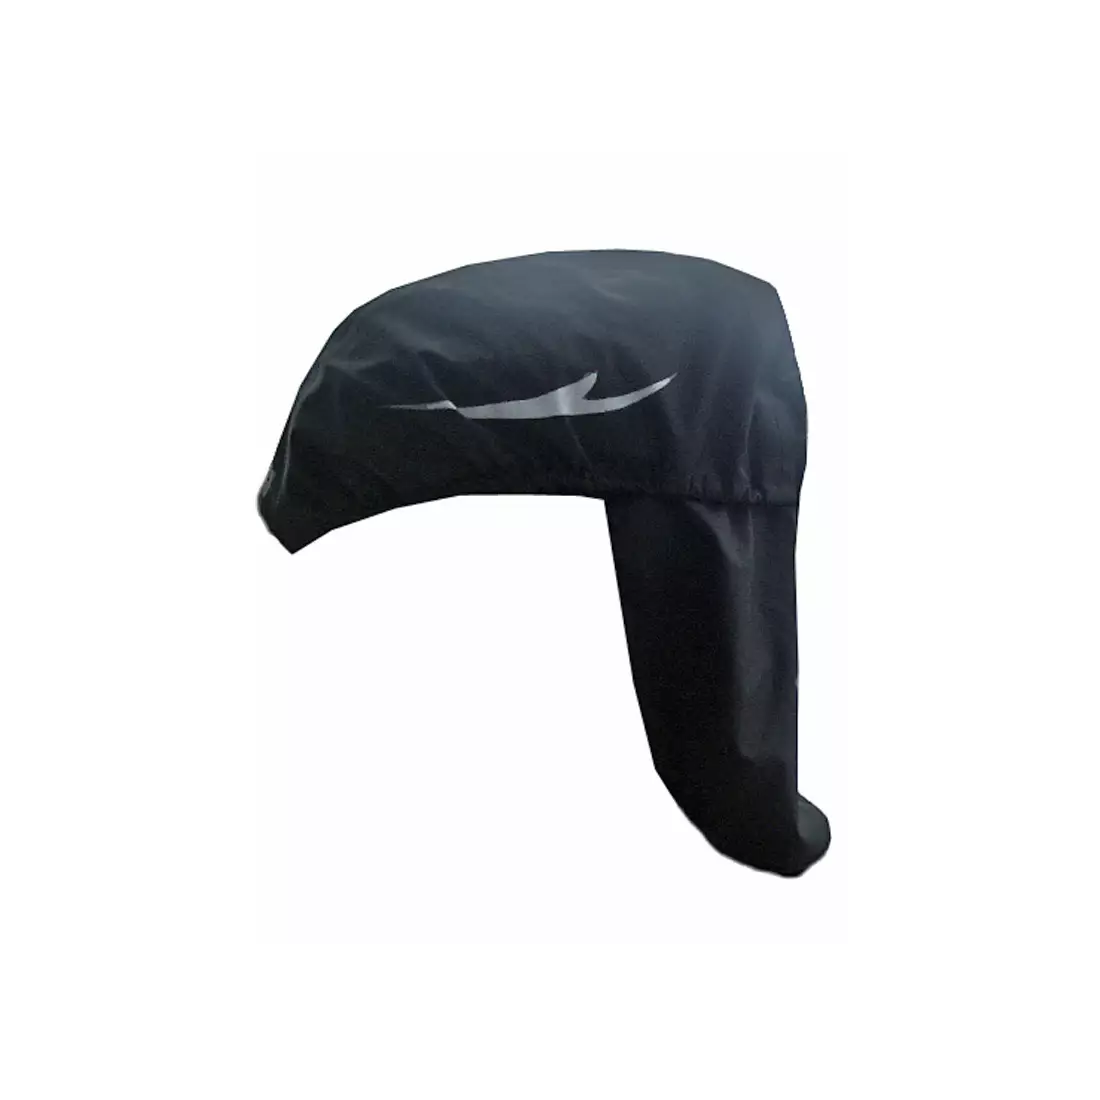 CHIBA SS19 RAINCOVER PRO 31423 helmet rain protector black one size